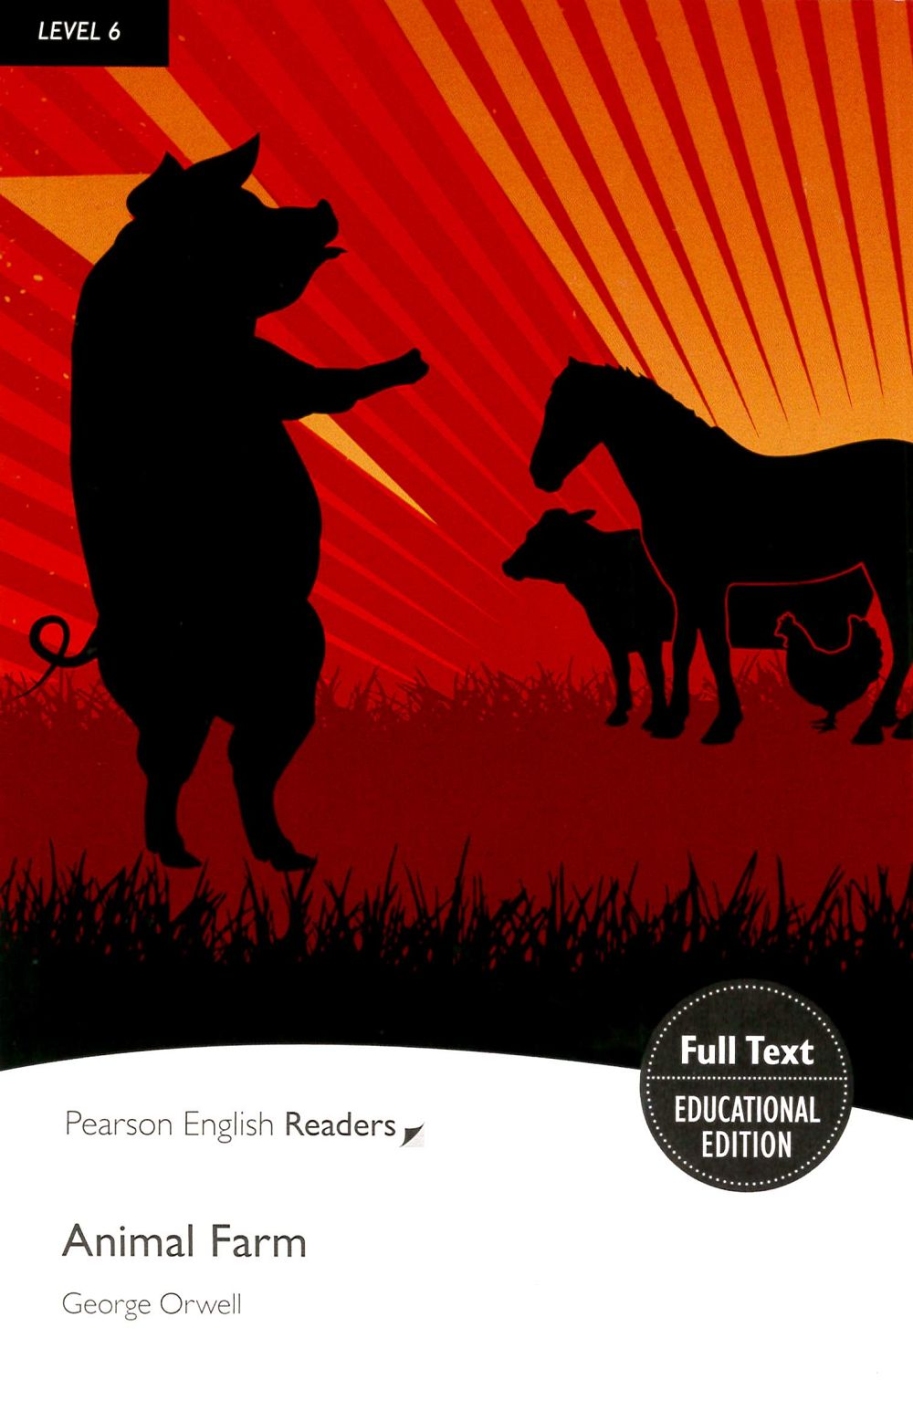 Pearson English Readers Level 6: Animal Farm